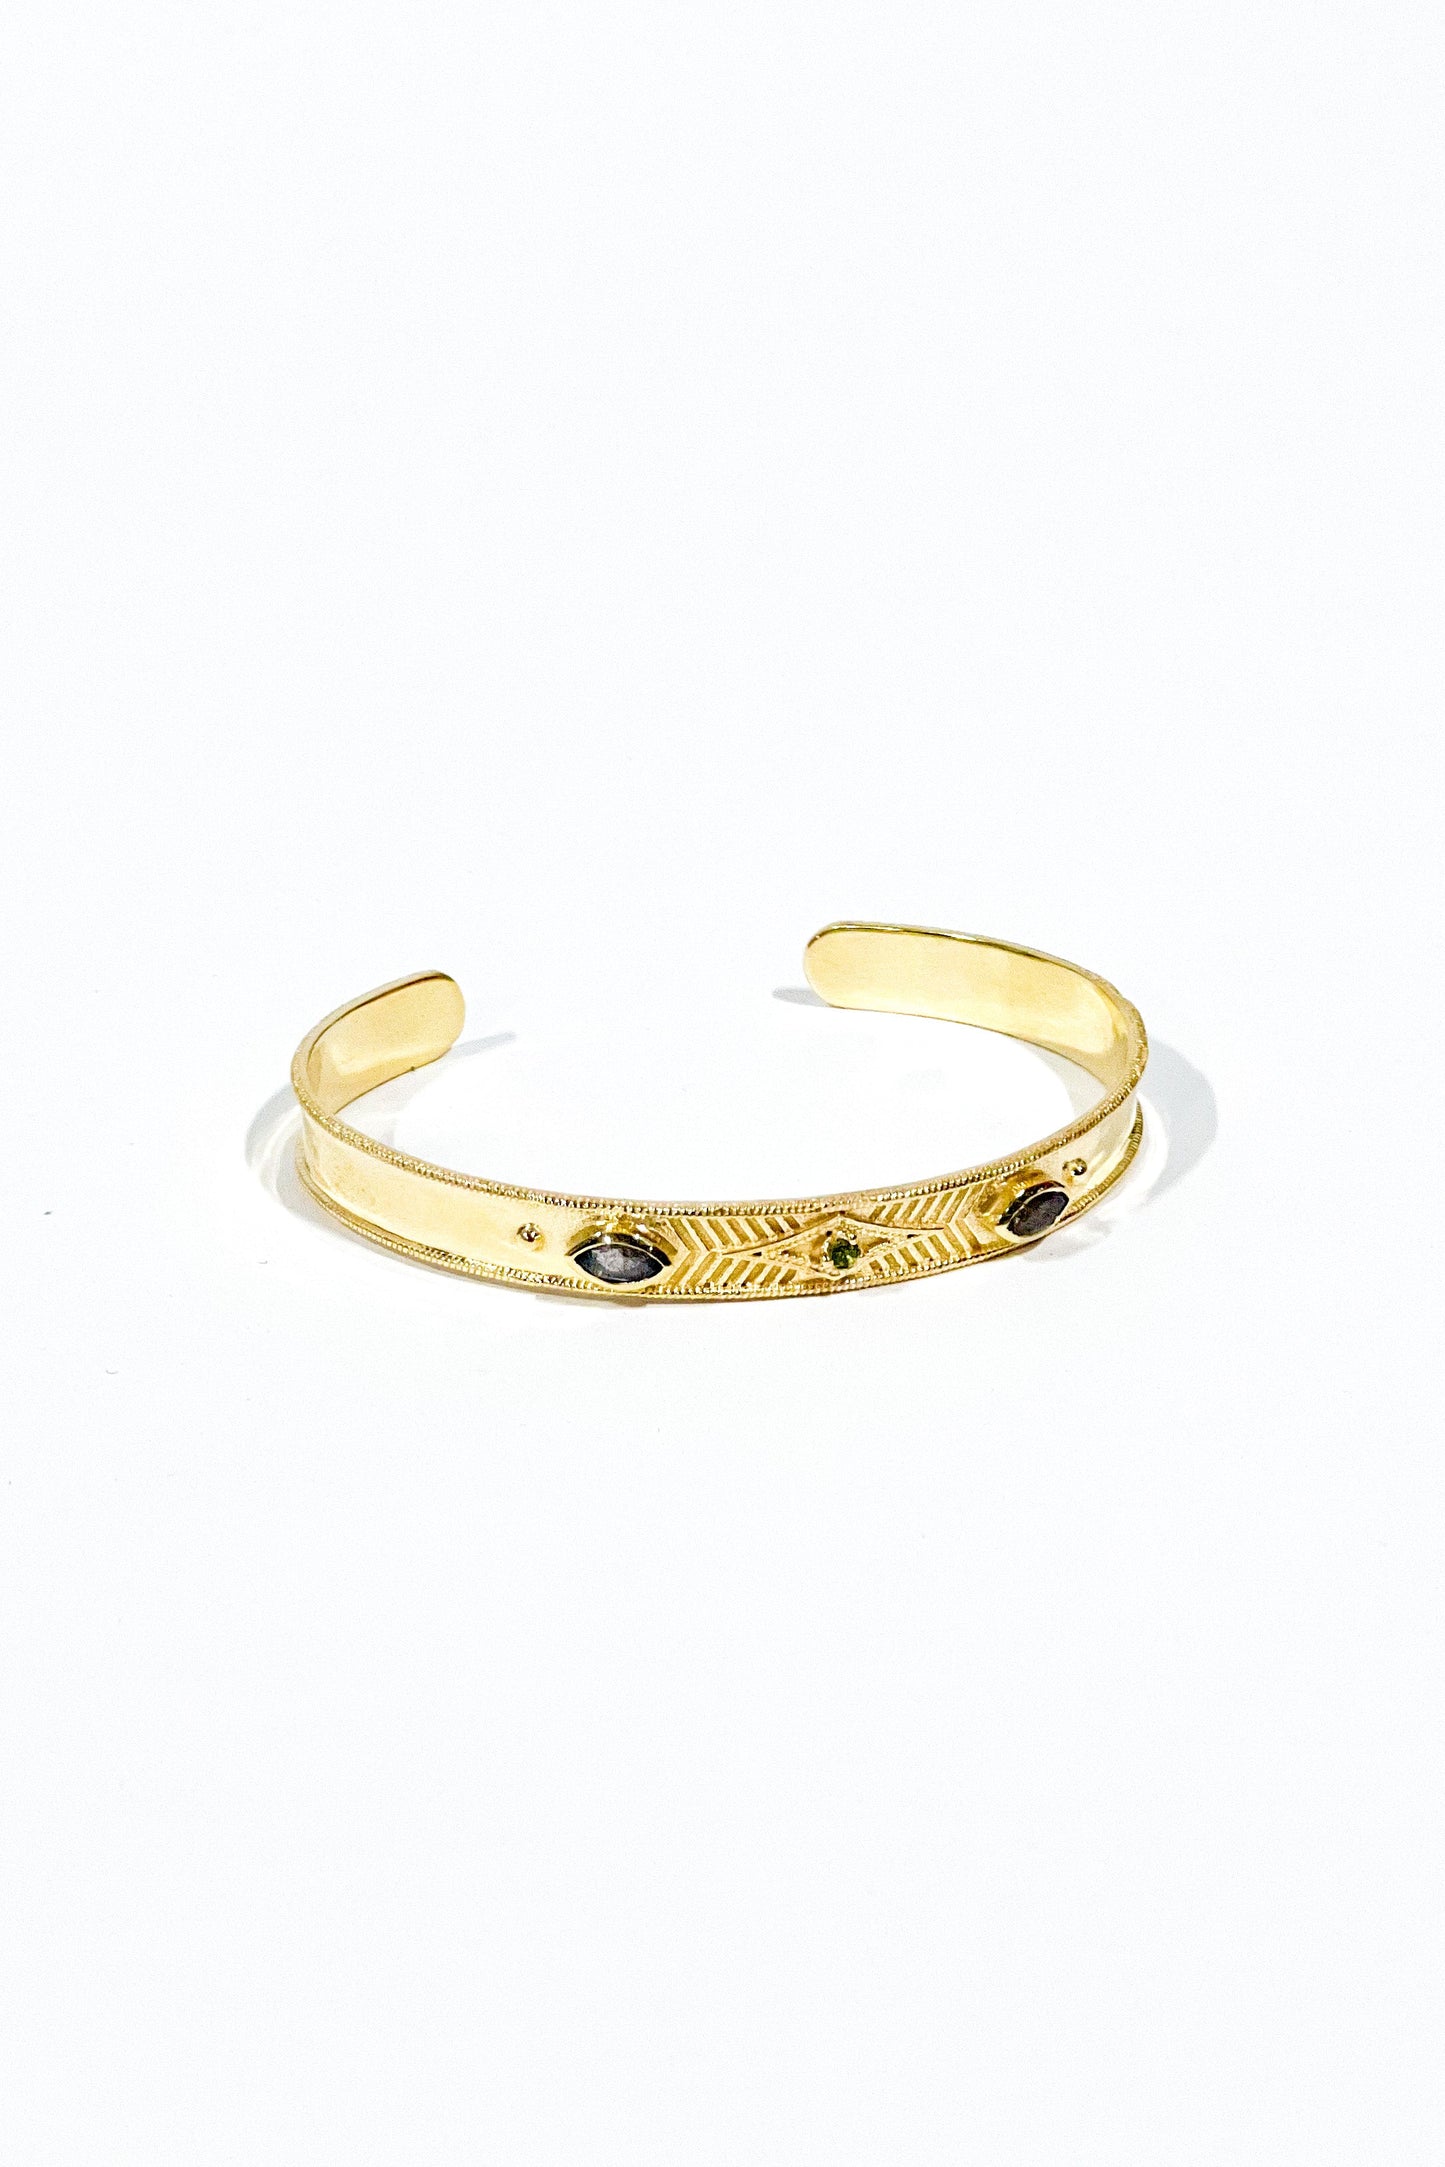 Jeweled Gold Cuff Bracelet